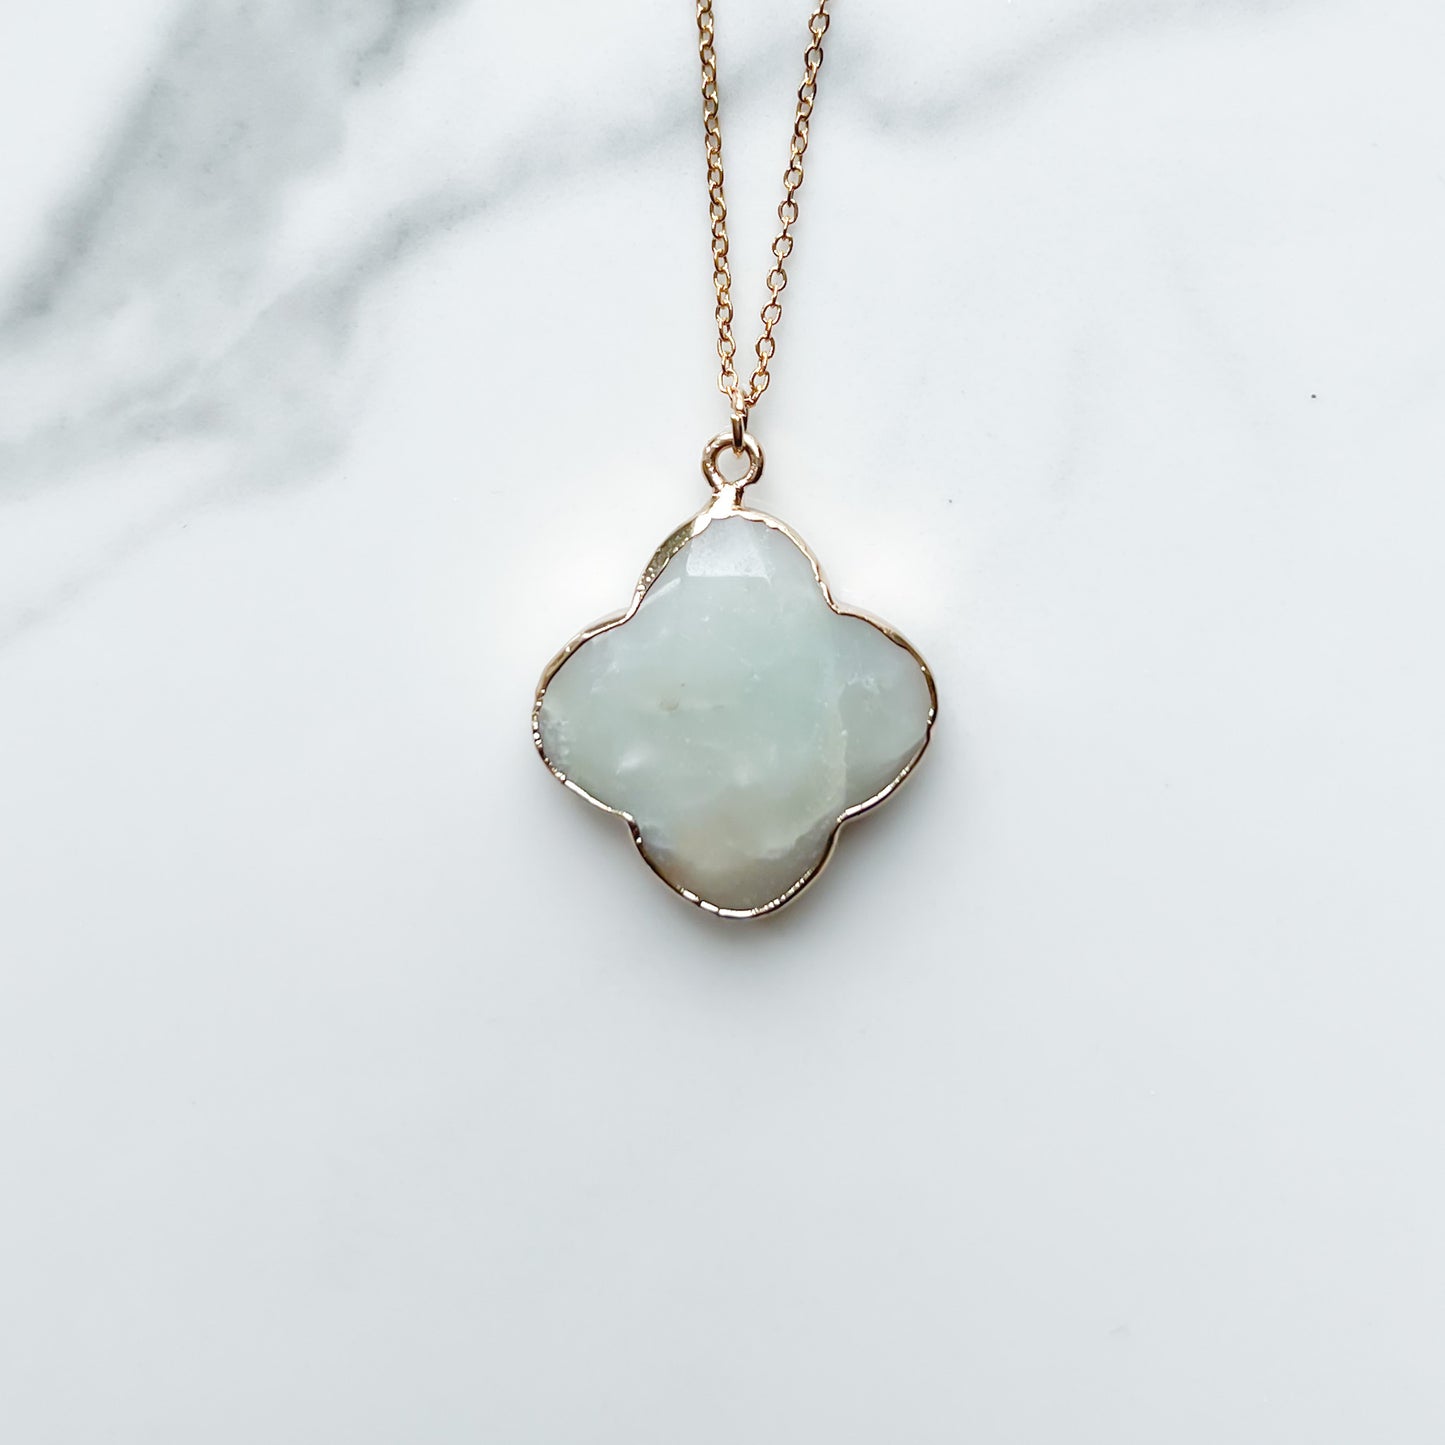 Semi precious healing gemstone clover shaped pendant necklace in amazonite